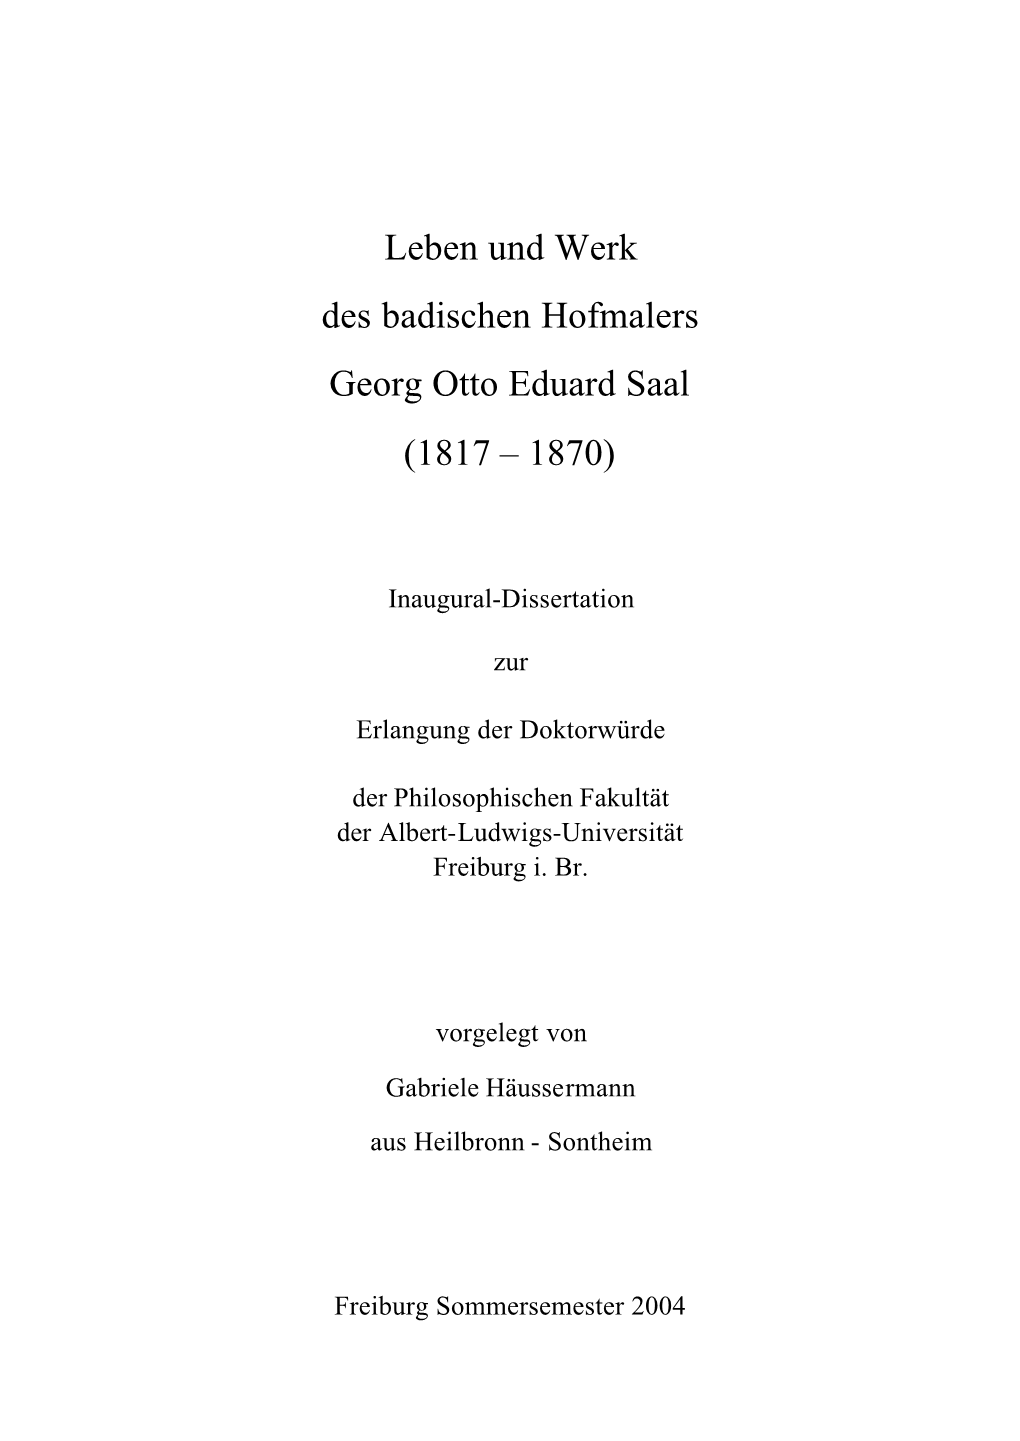 Text Dissertation G. Saal